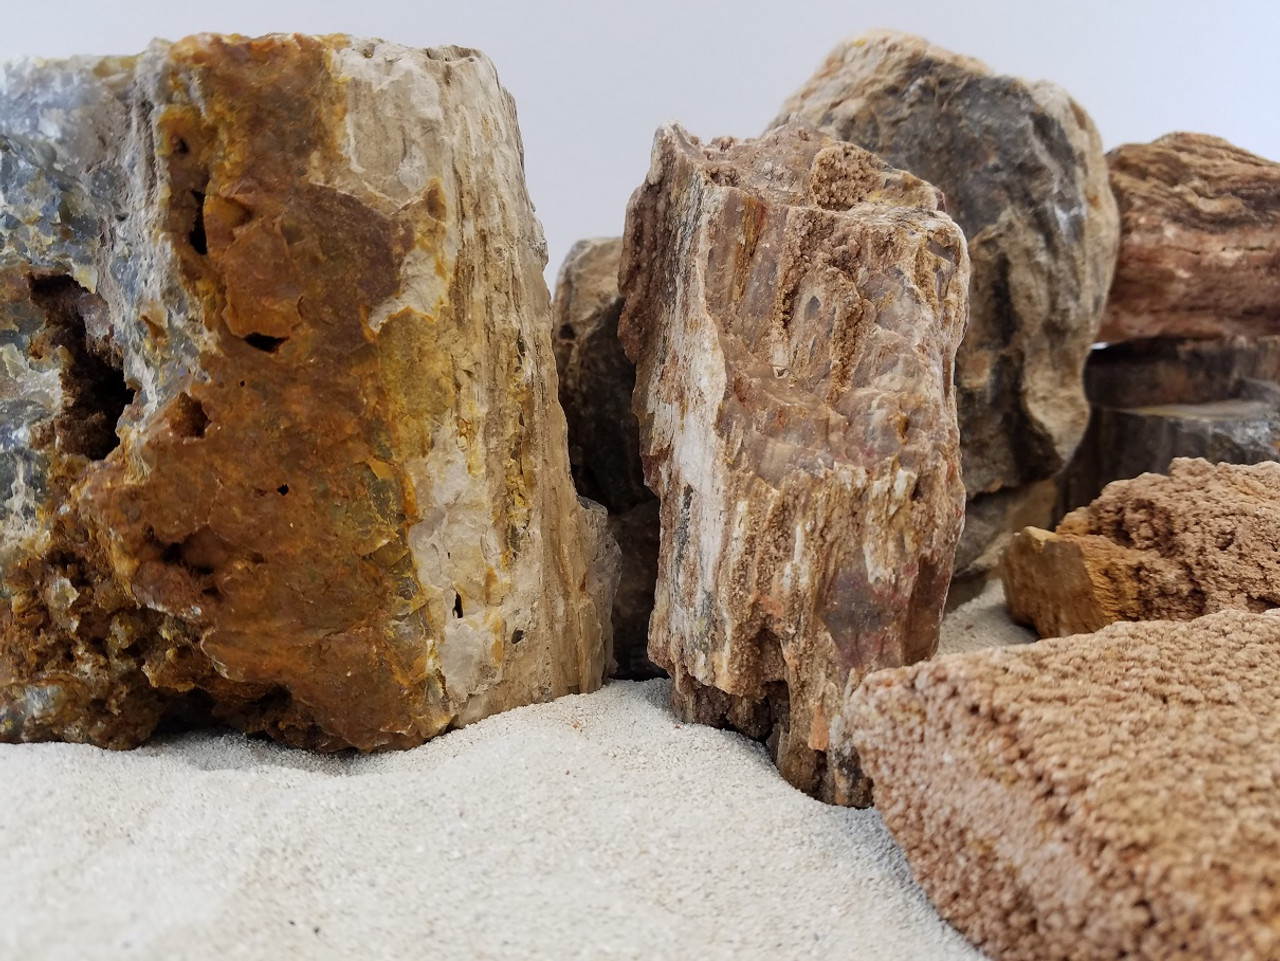 Lifegard Canyon Petrified Stone - 15 Lbs Mix Size Kit of Medium and Small Rocks